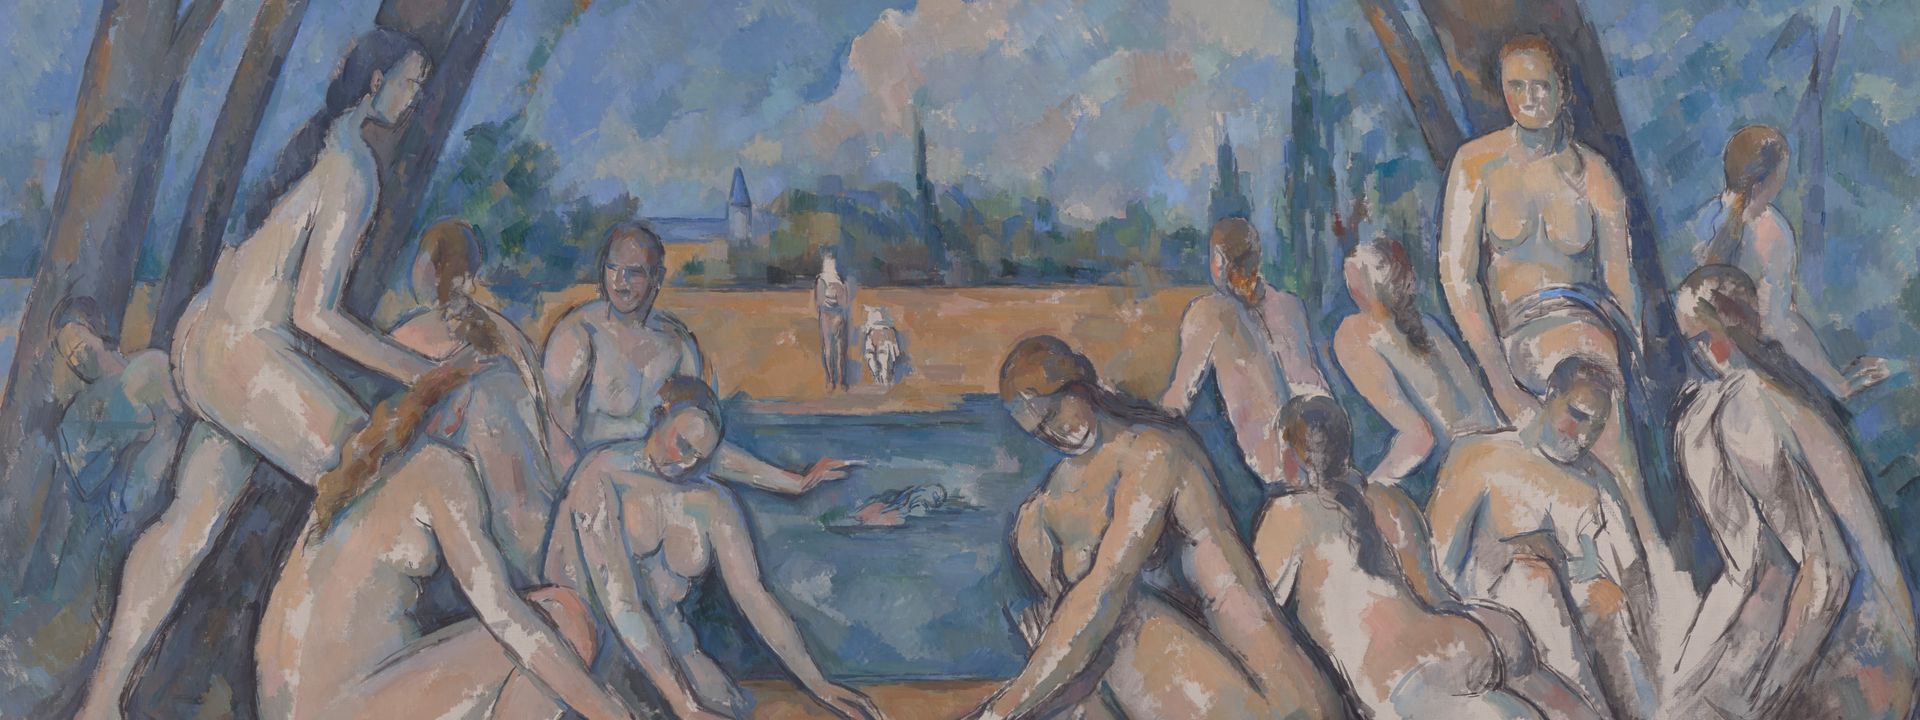 The Large Bathers, 1900–06, by Paul Cézanne